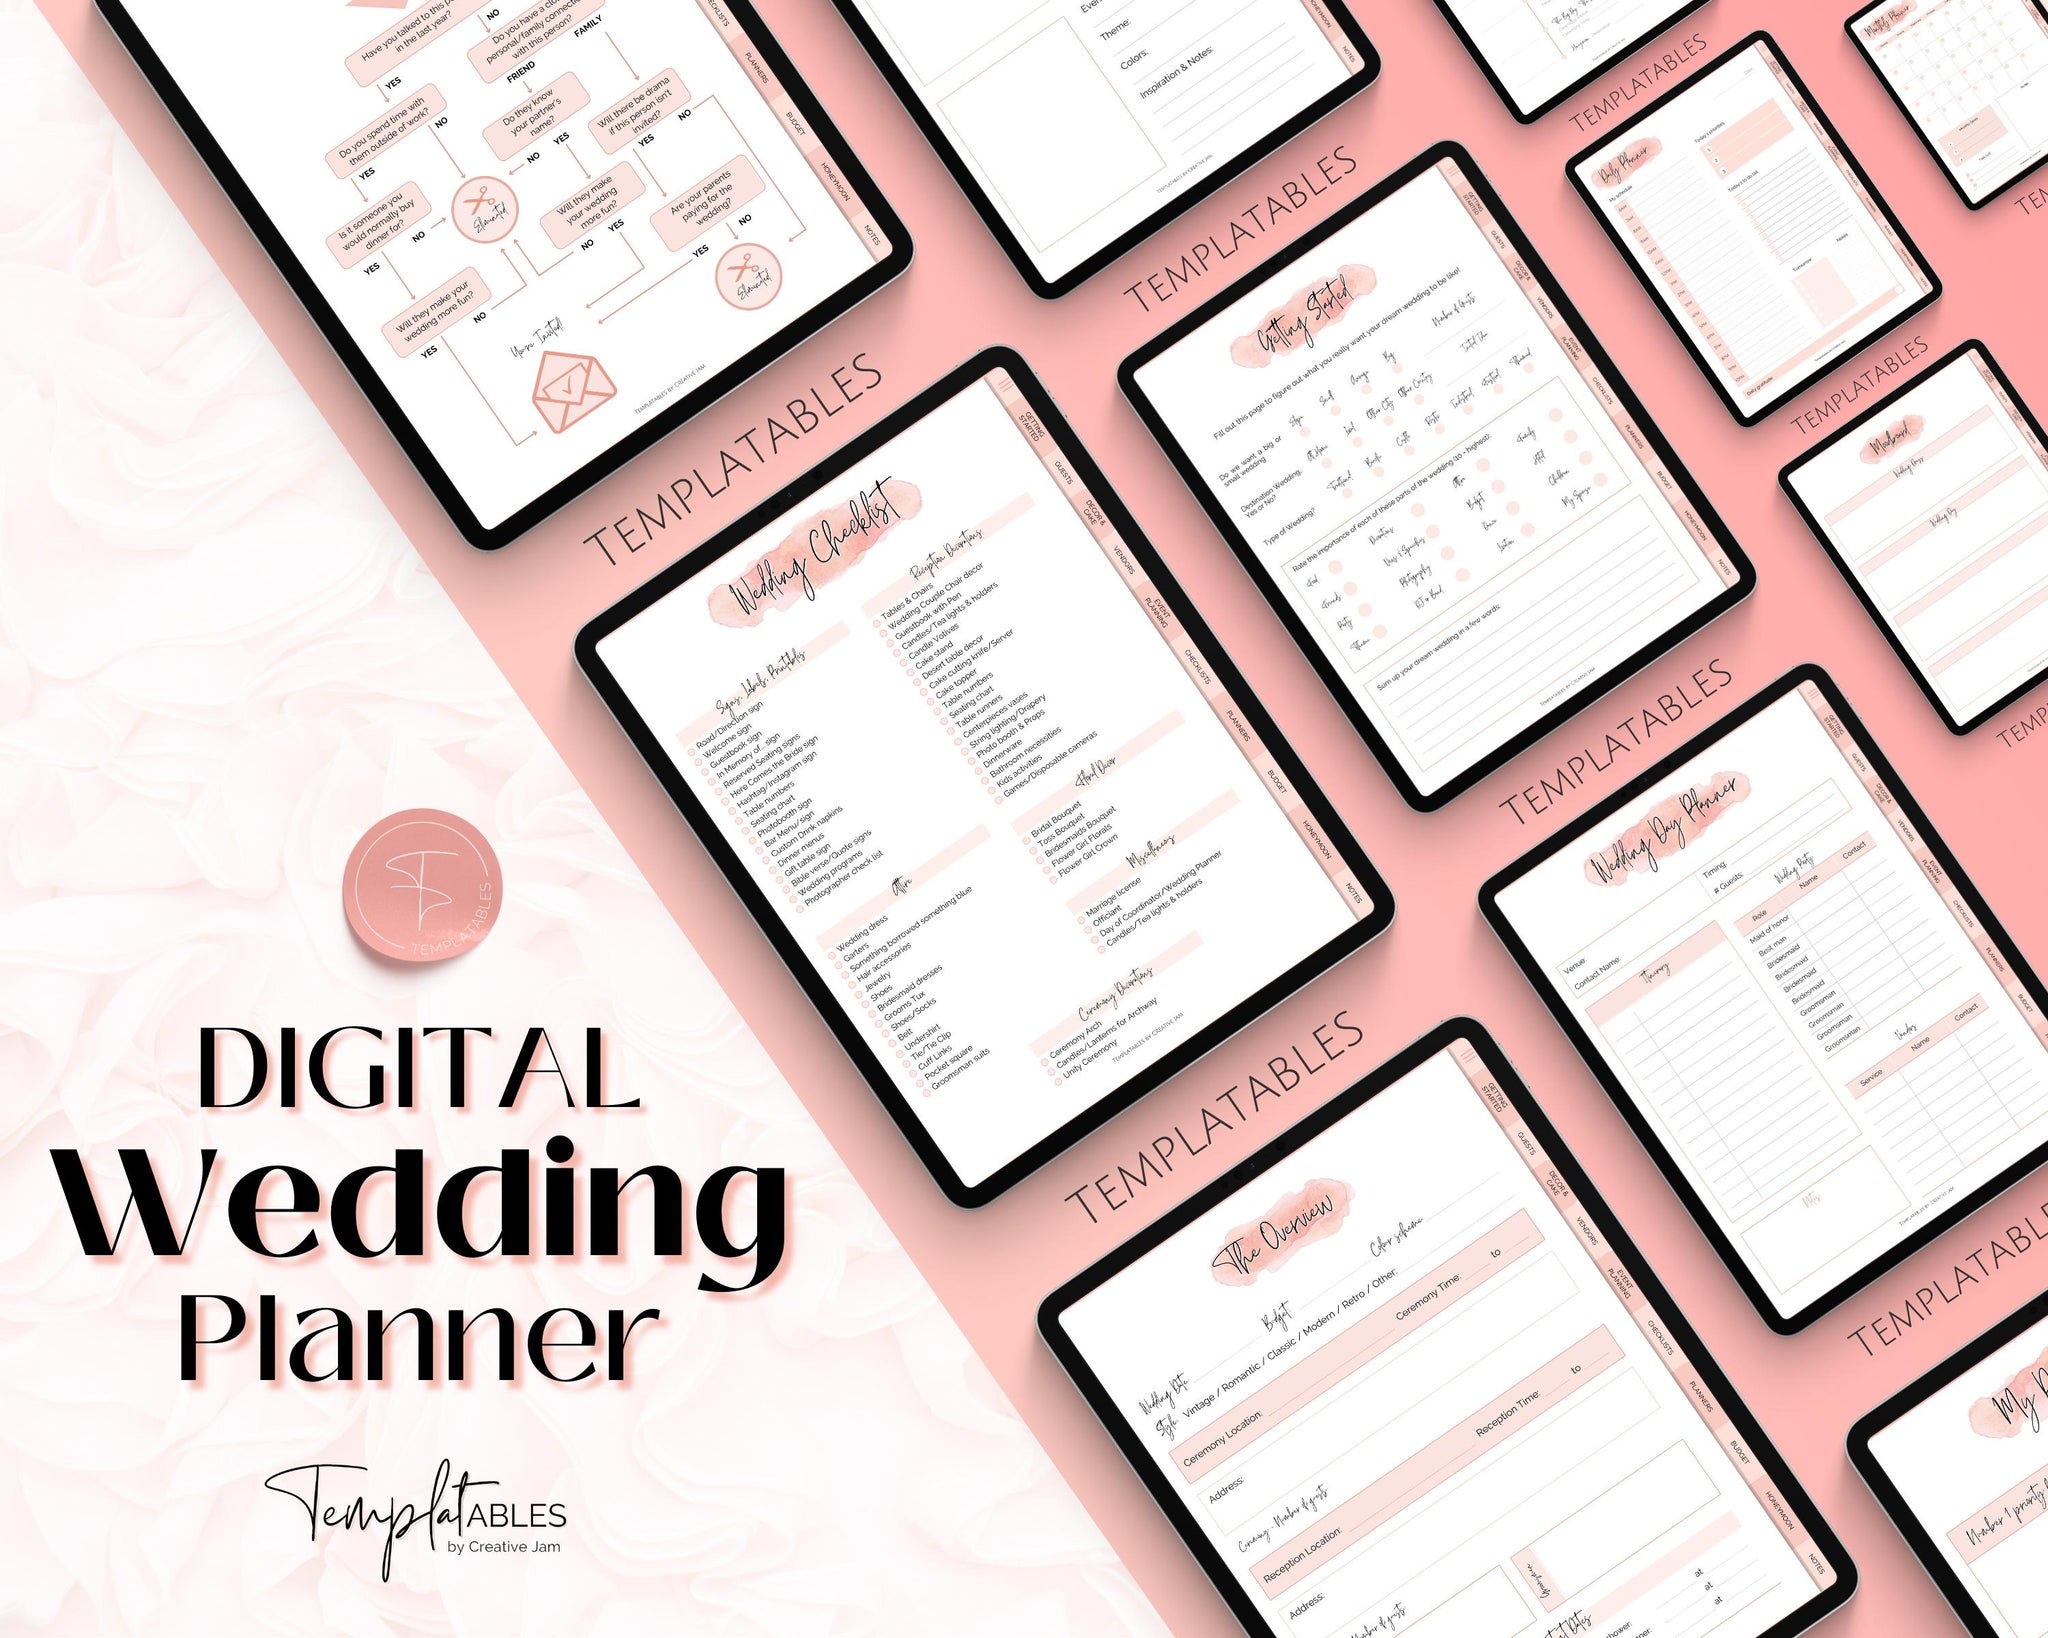 Digital Ultimate Wedding Planner for iPad